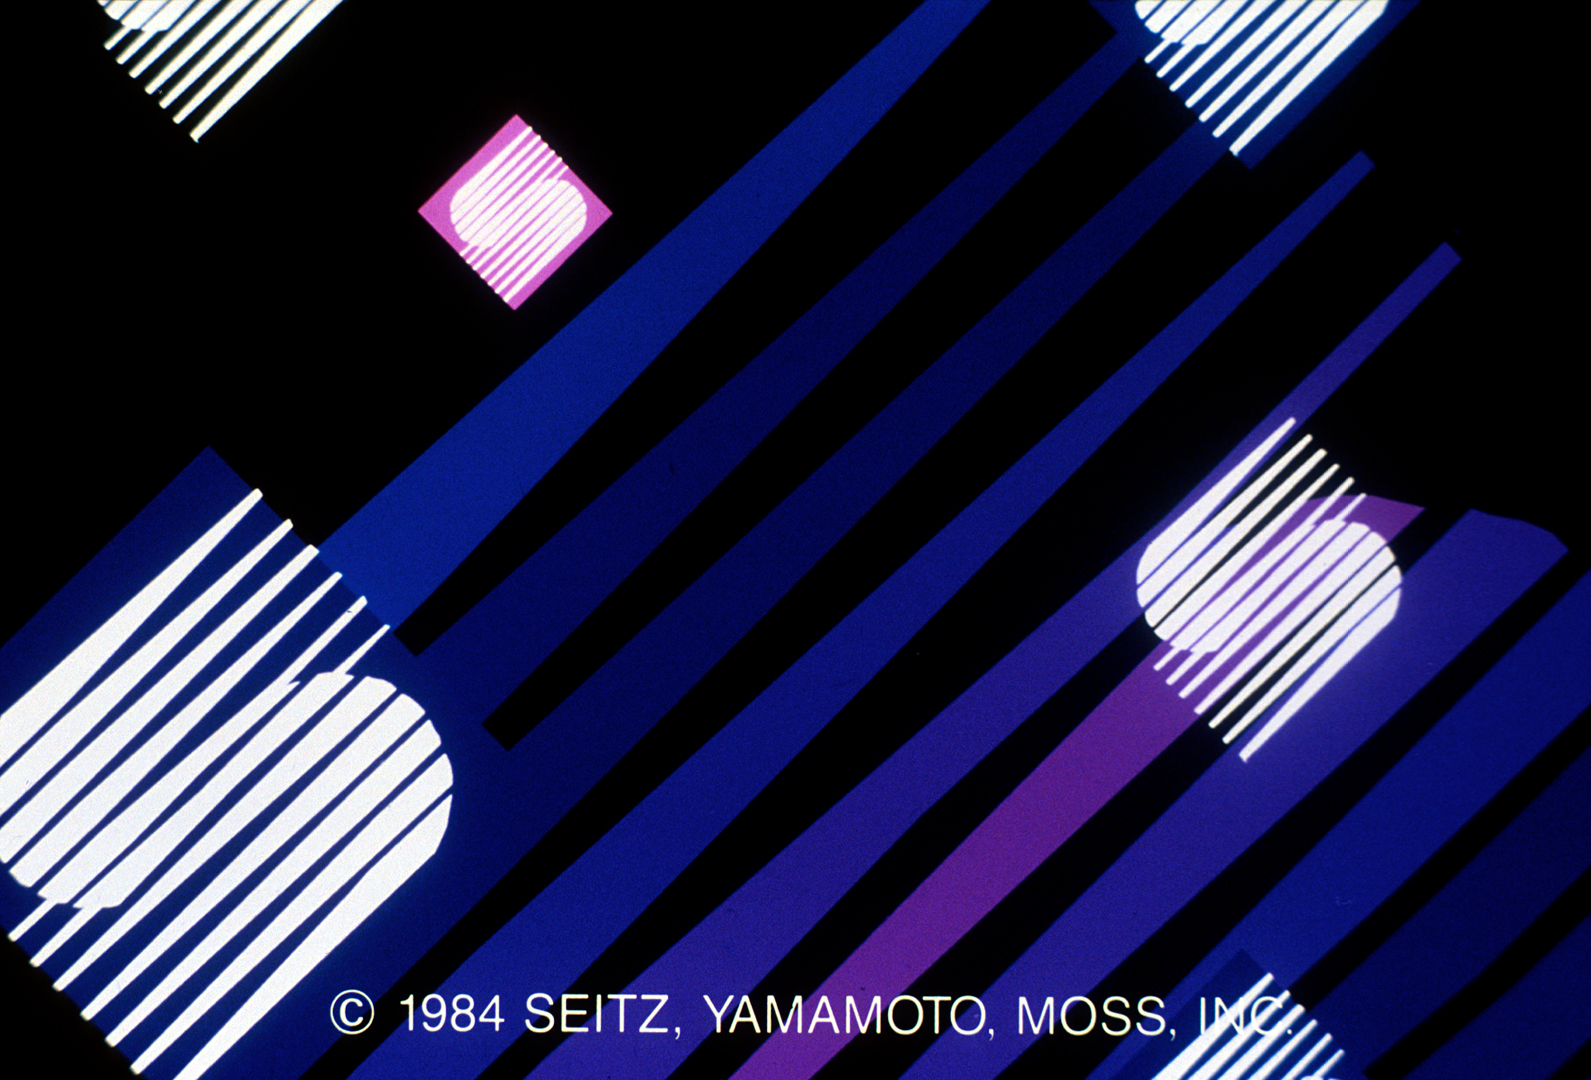 ©, Seitz Yamamoto Moss Inc. and Peter Seitz